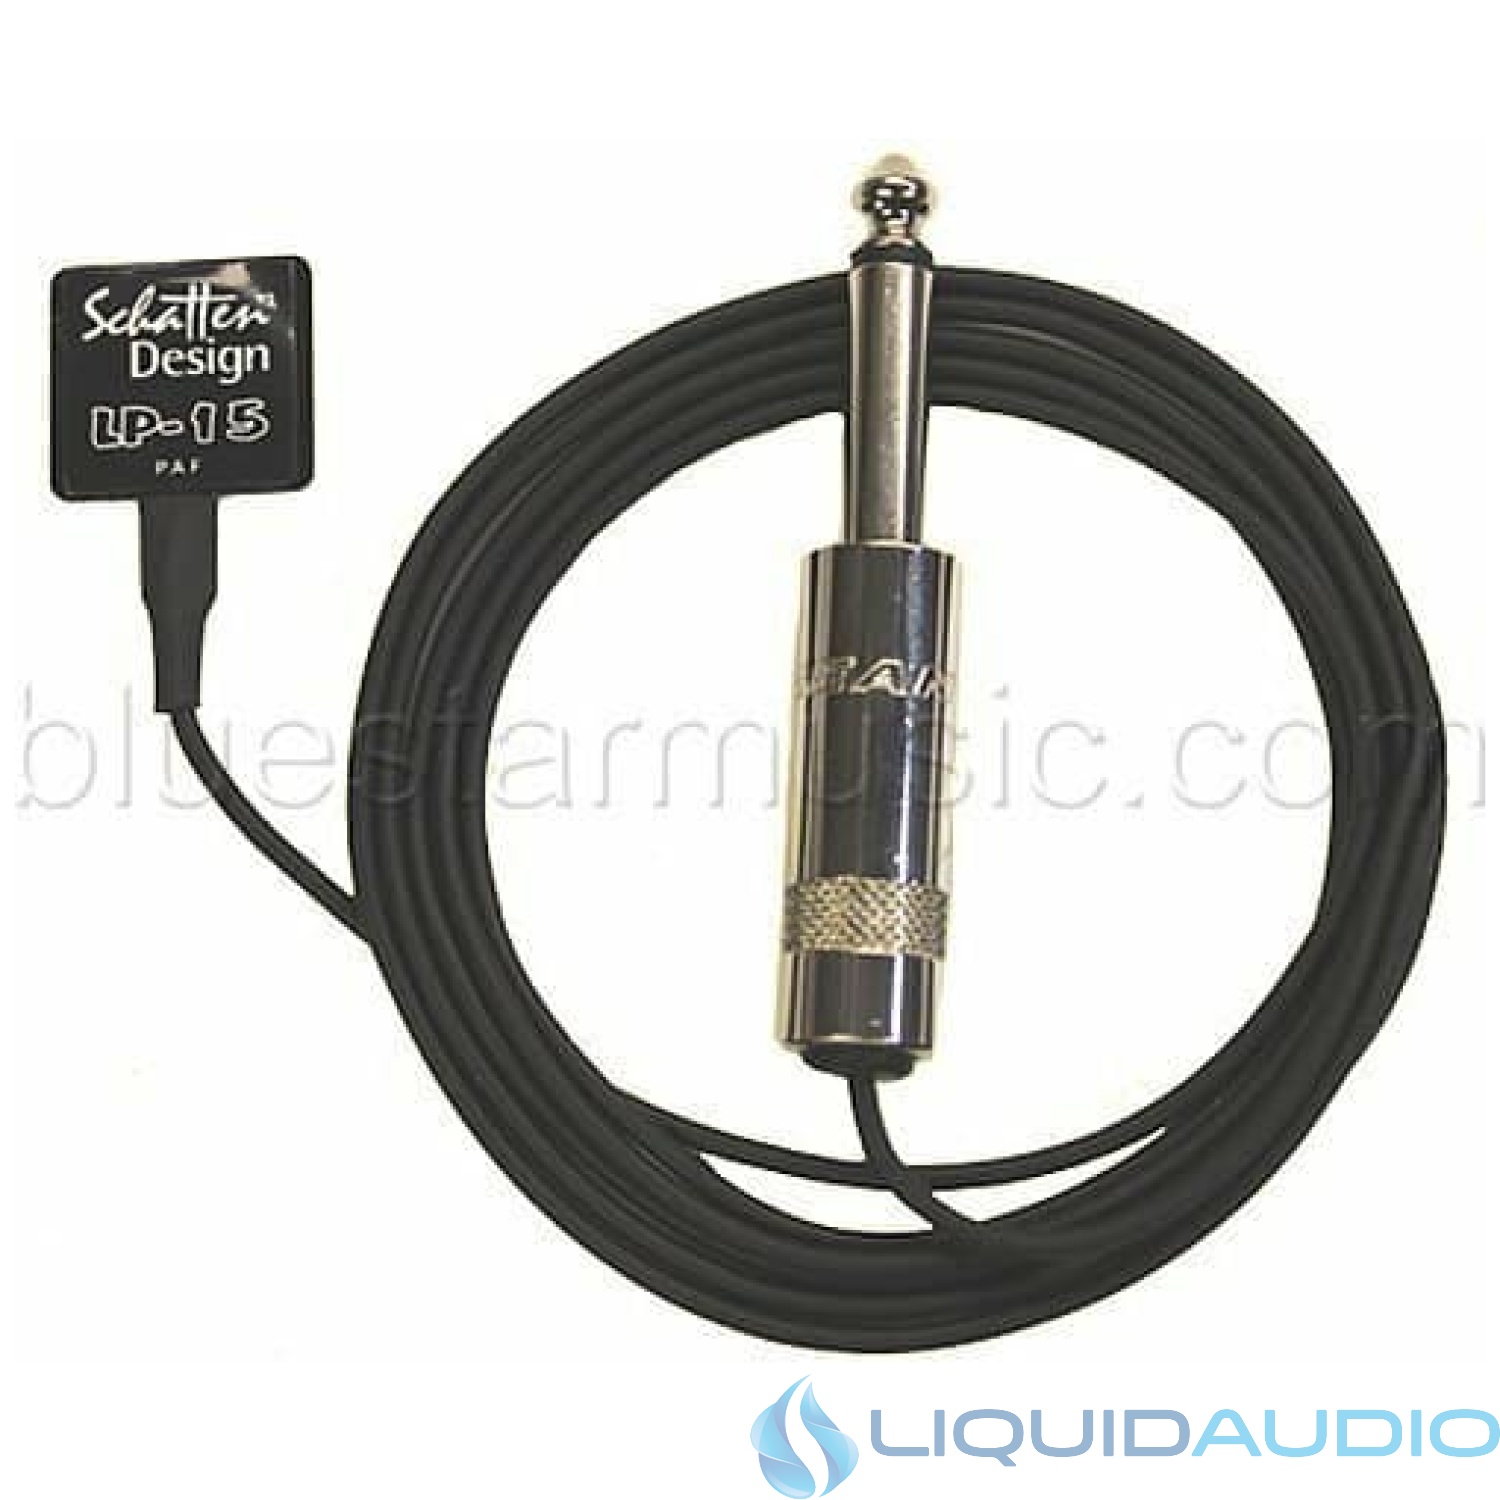 Schatten LP-15 Outsider Guitar/Ukulele Soundboard Pickup w/Cable, External Mount